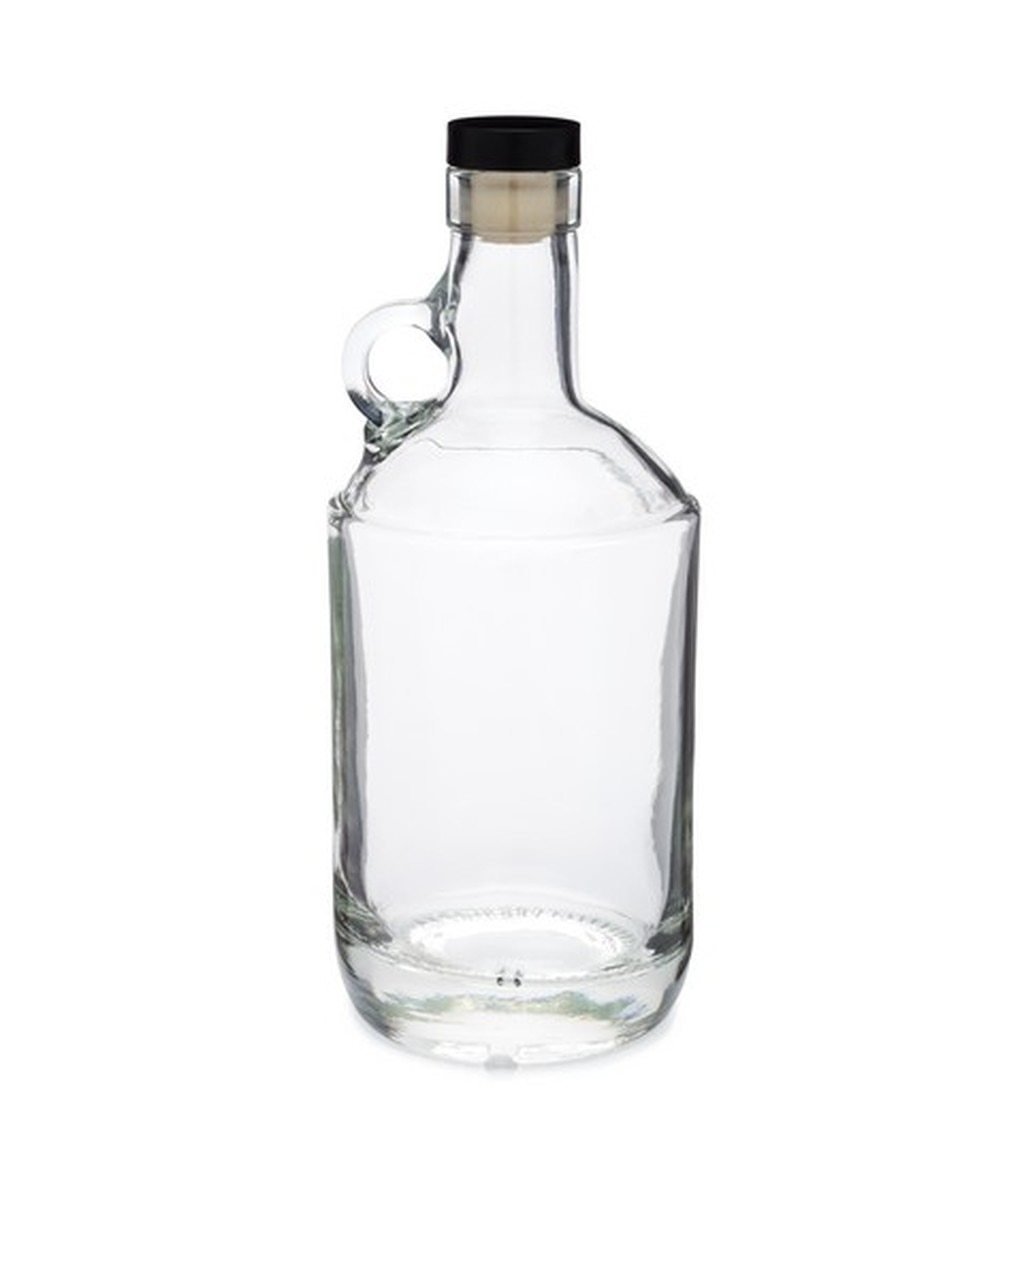 Moonshine Jug with Bar Top Cork - Cased 12 - Rock Bottom Bottles / Packaging Company LLC